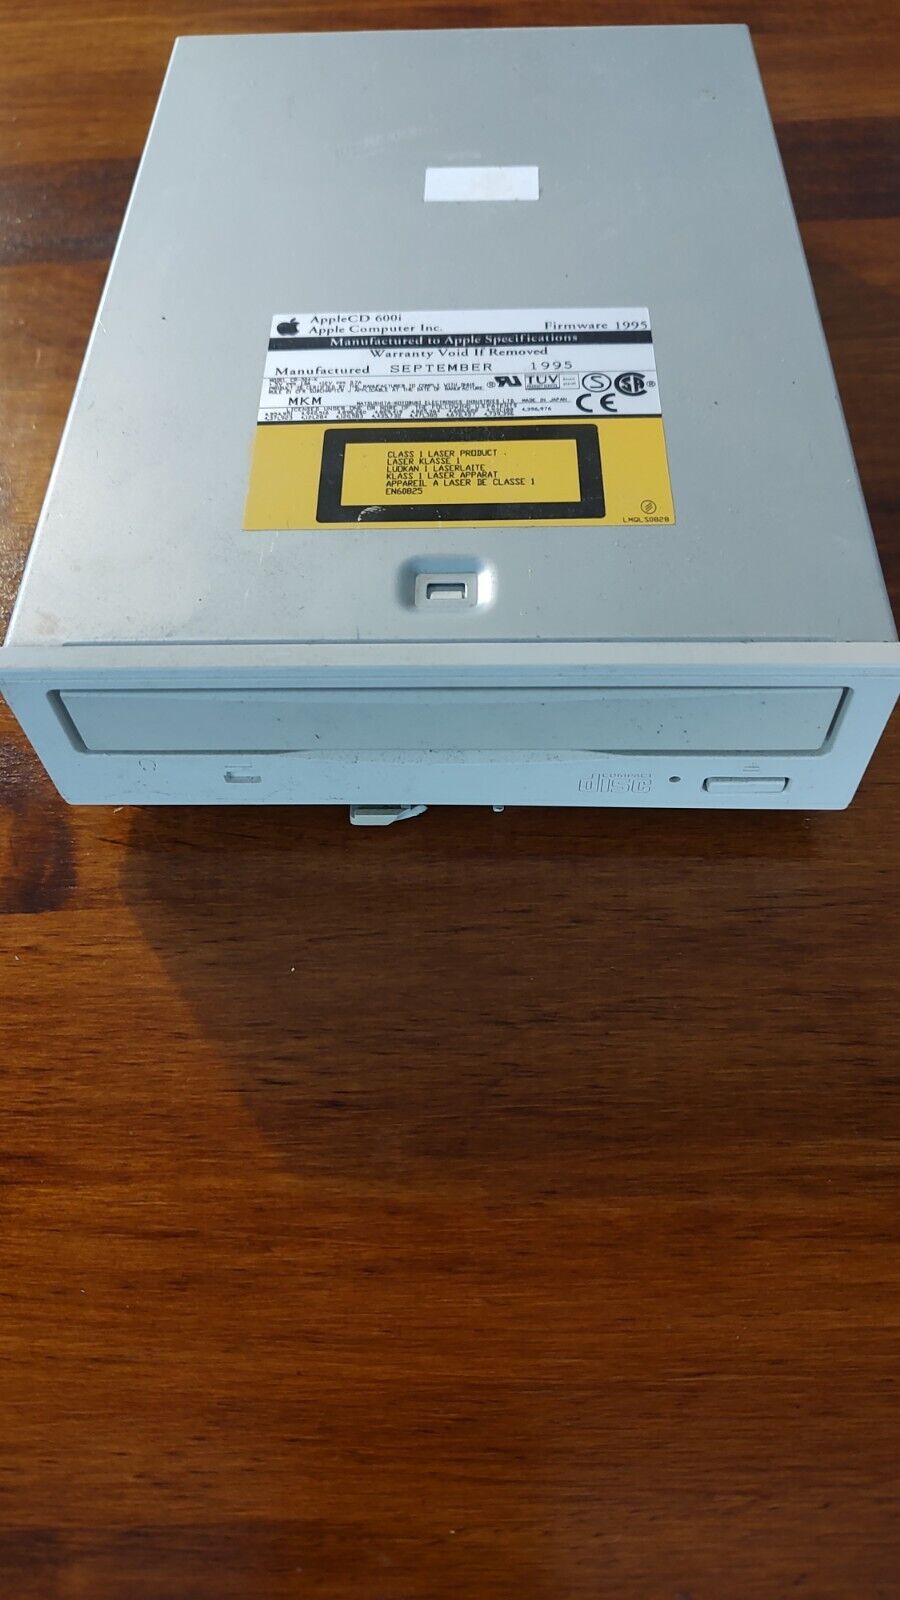 AppleCD 600i - Working Tested - Apple Mac Macintosh SCSI 50pin CD-ROM drive